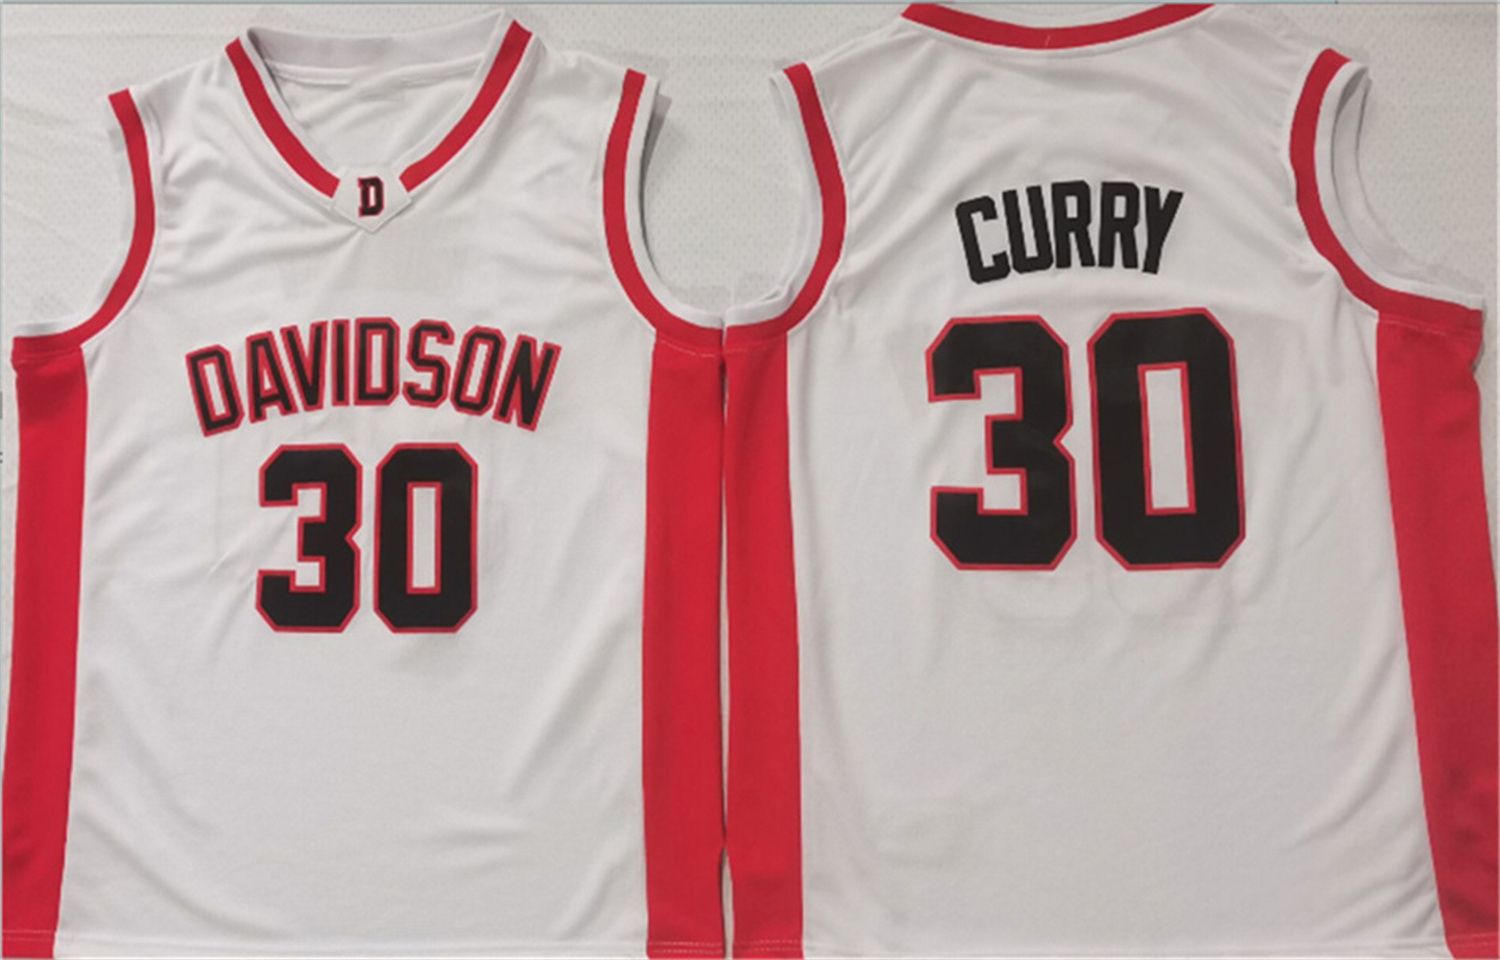 Davidson Wildcats Blanc # 30 Curry